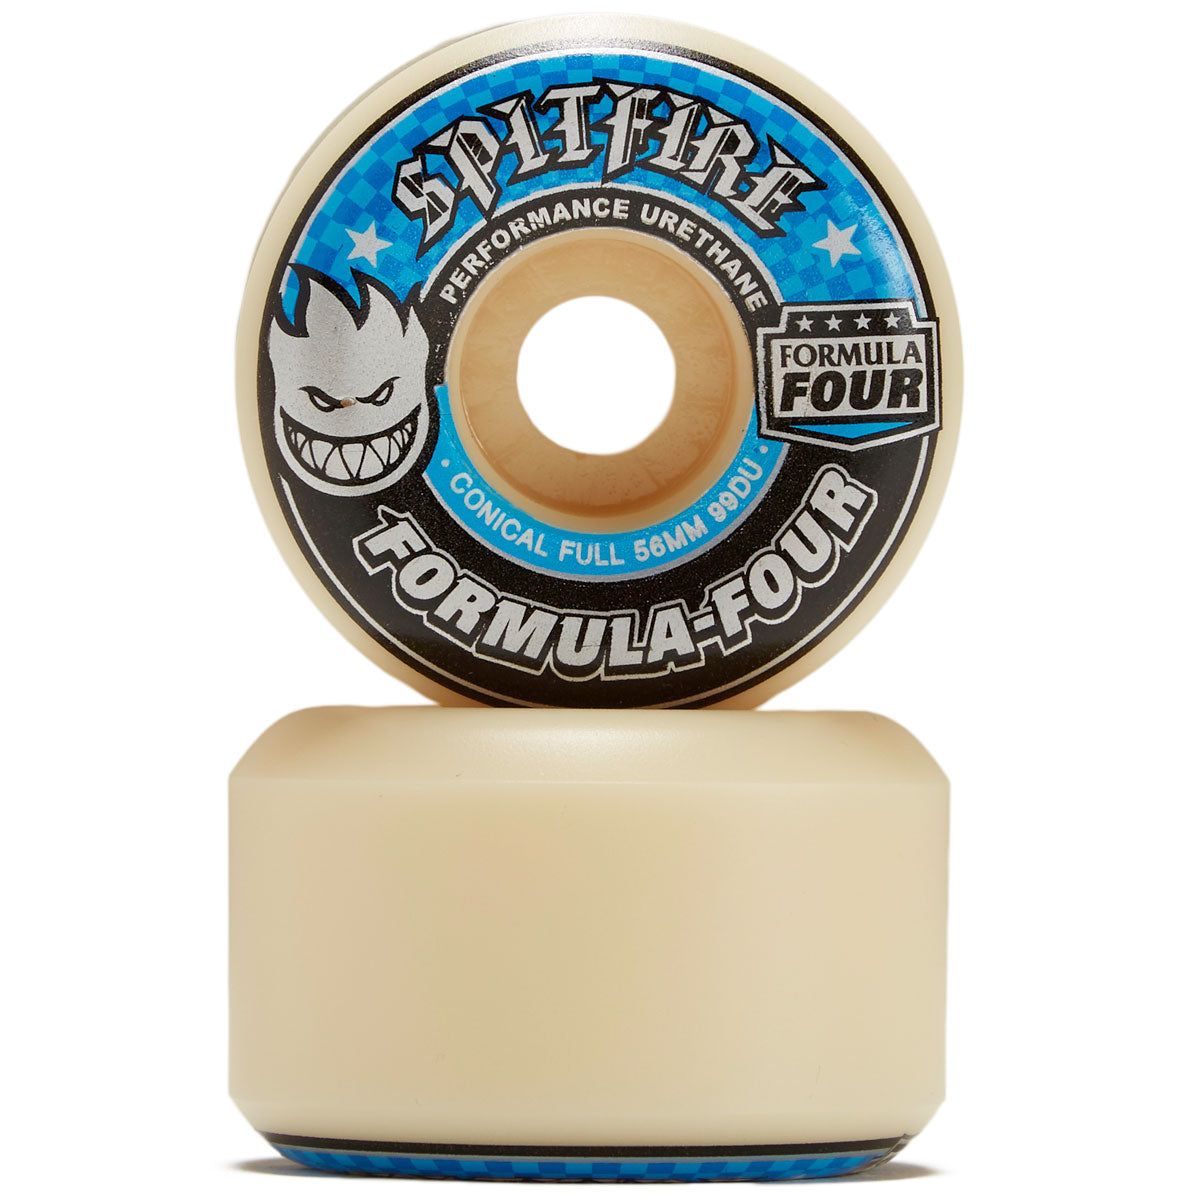 Spitfire F4 99d Conical Full Skateboard Wheels - 56mm image 2